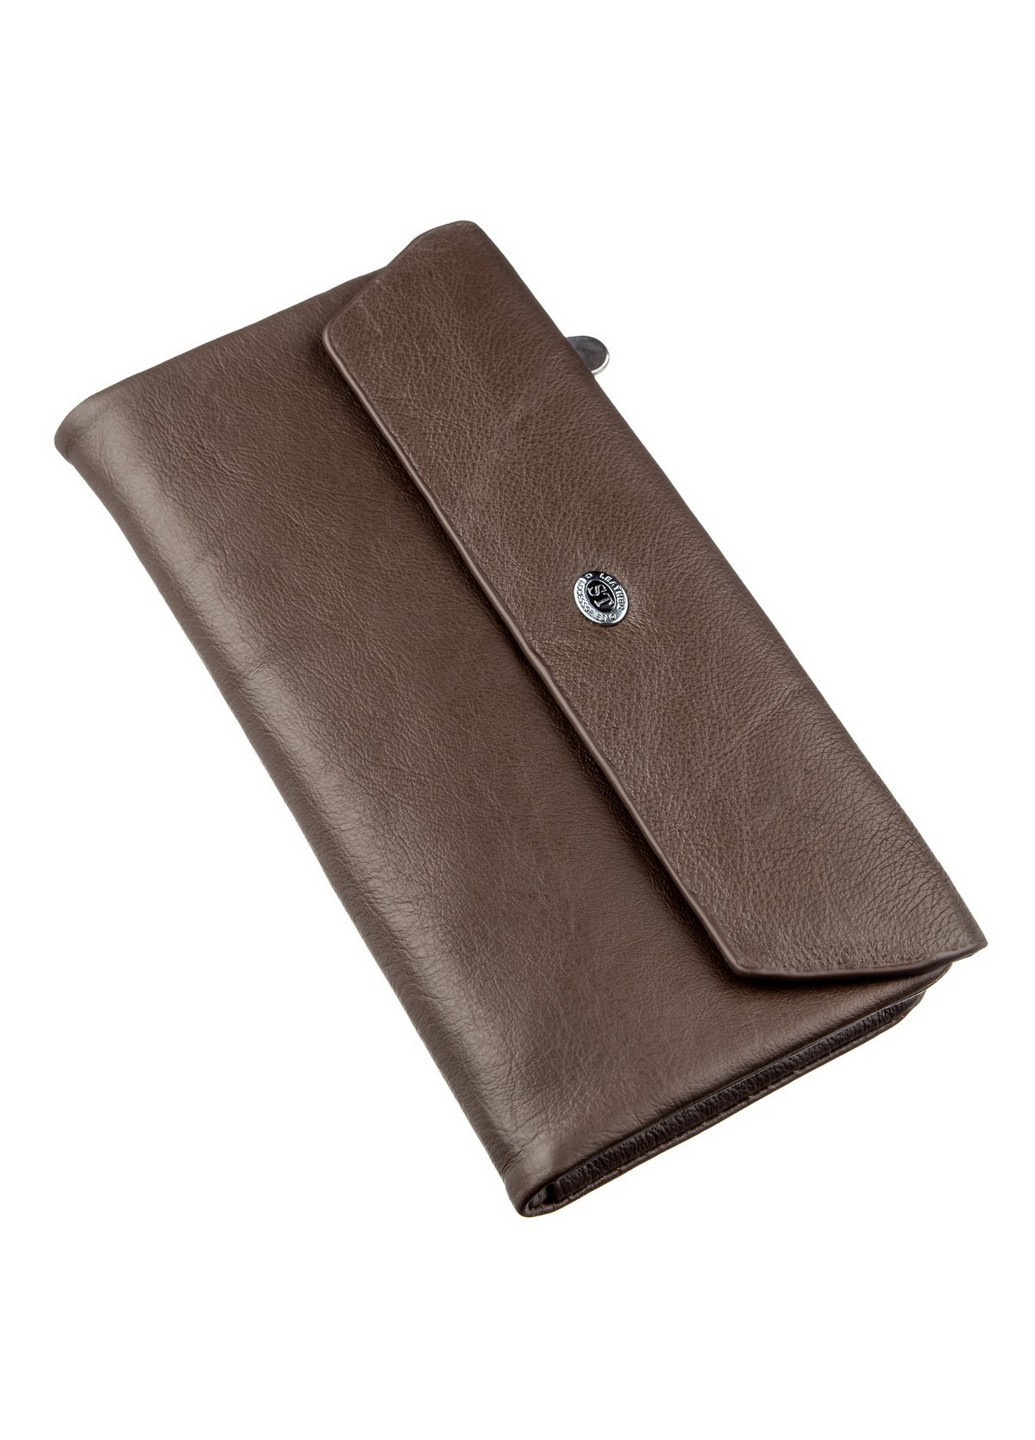 Кошелек женский кожаный-клатч 19х10 см st leather (258885603)